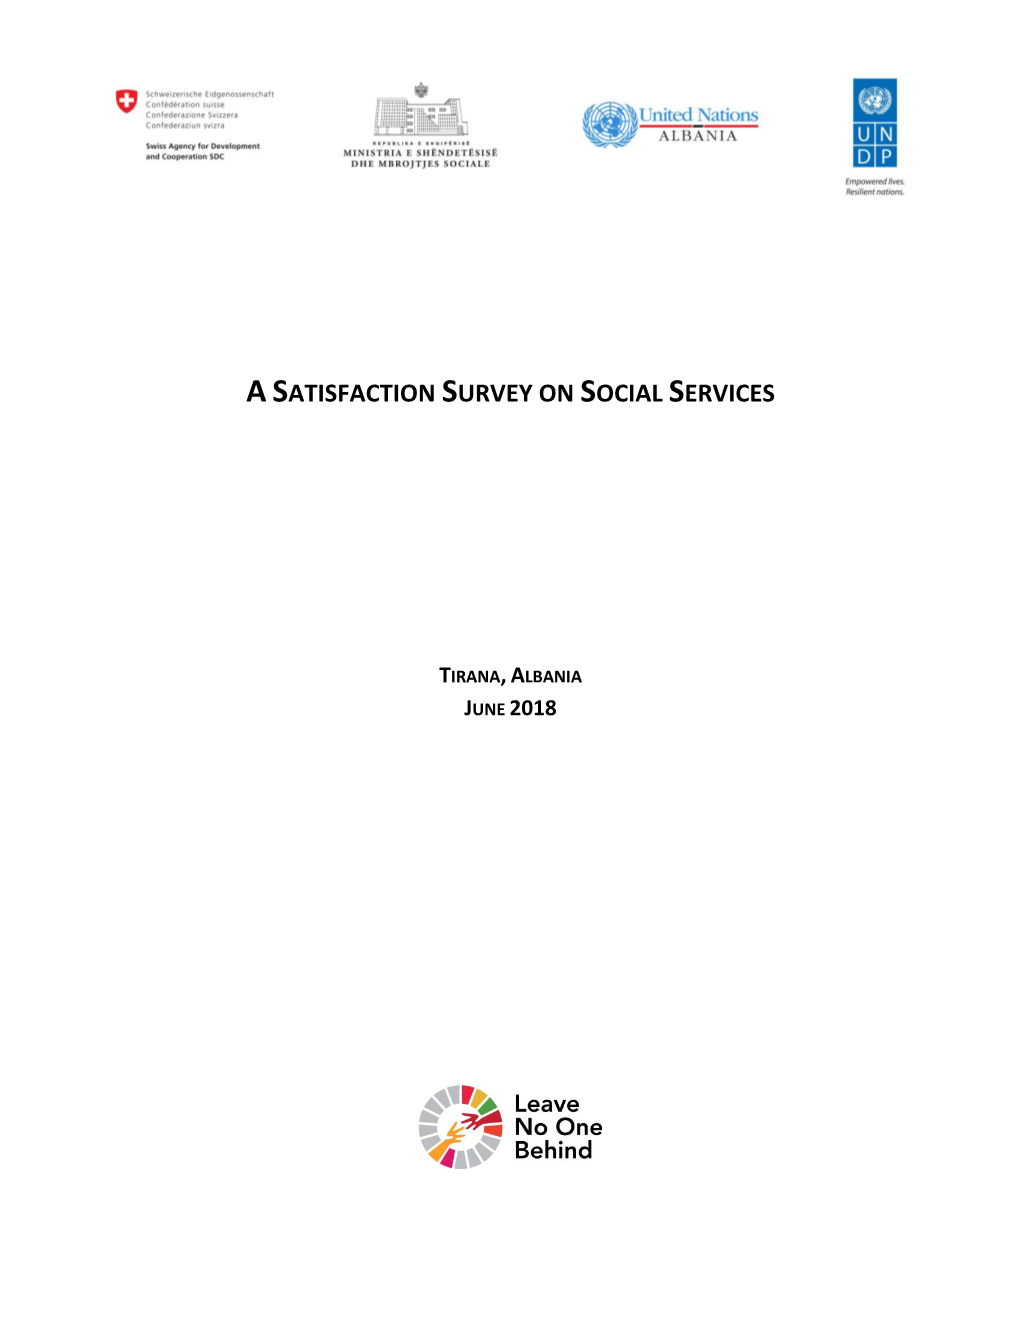 Asatisfaction Survey on Social Services